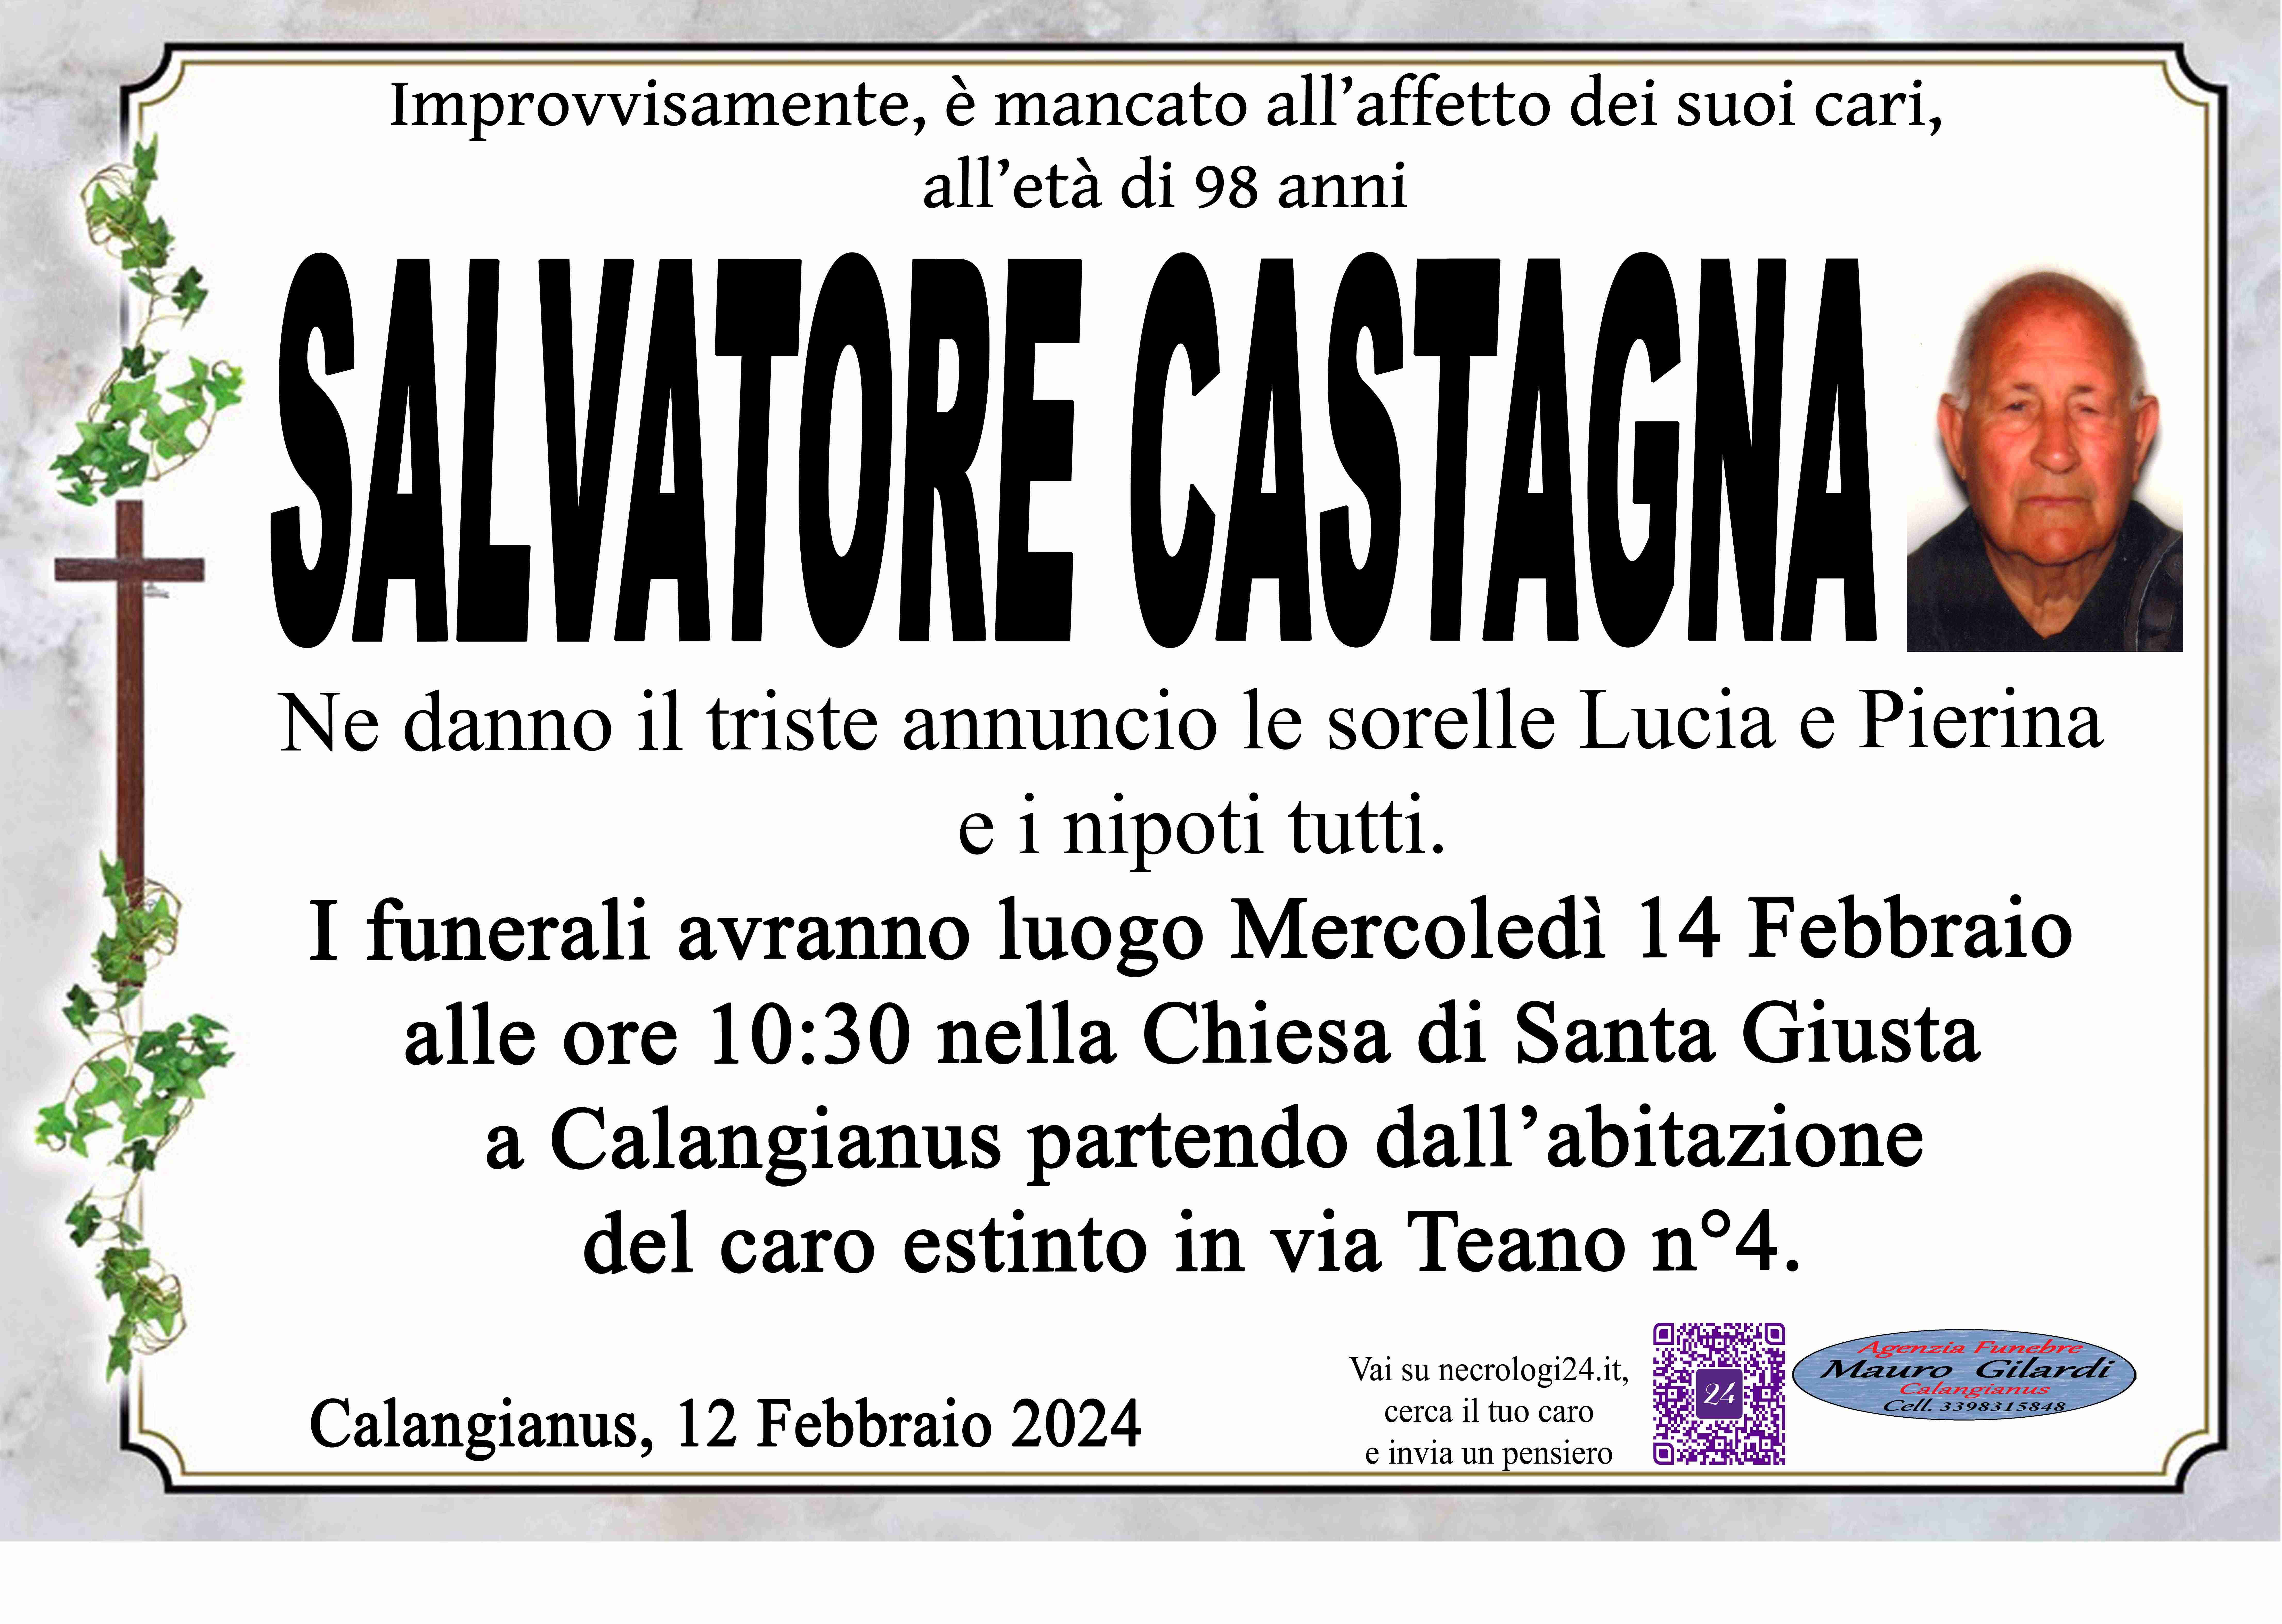 Salvatore Castagna